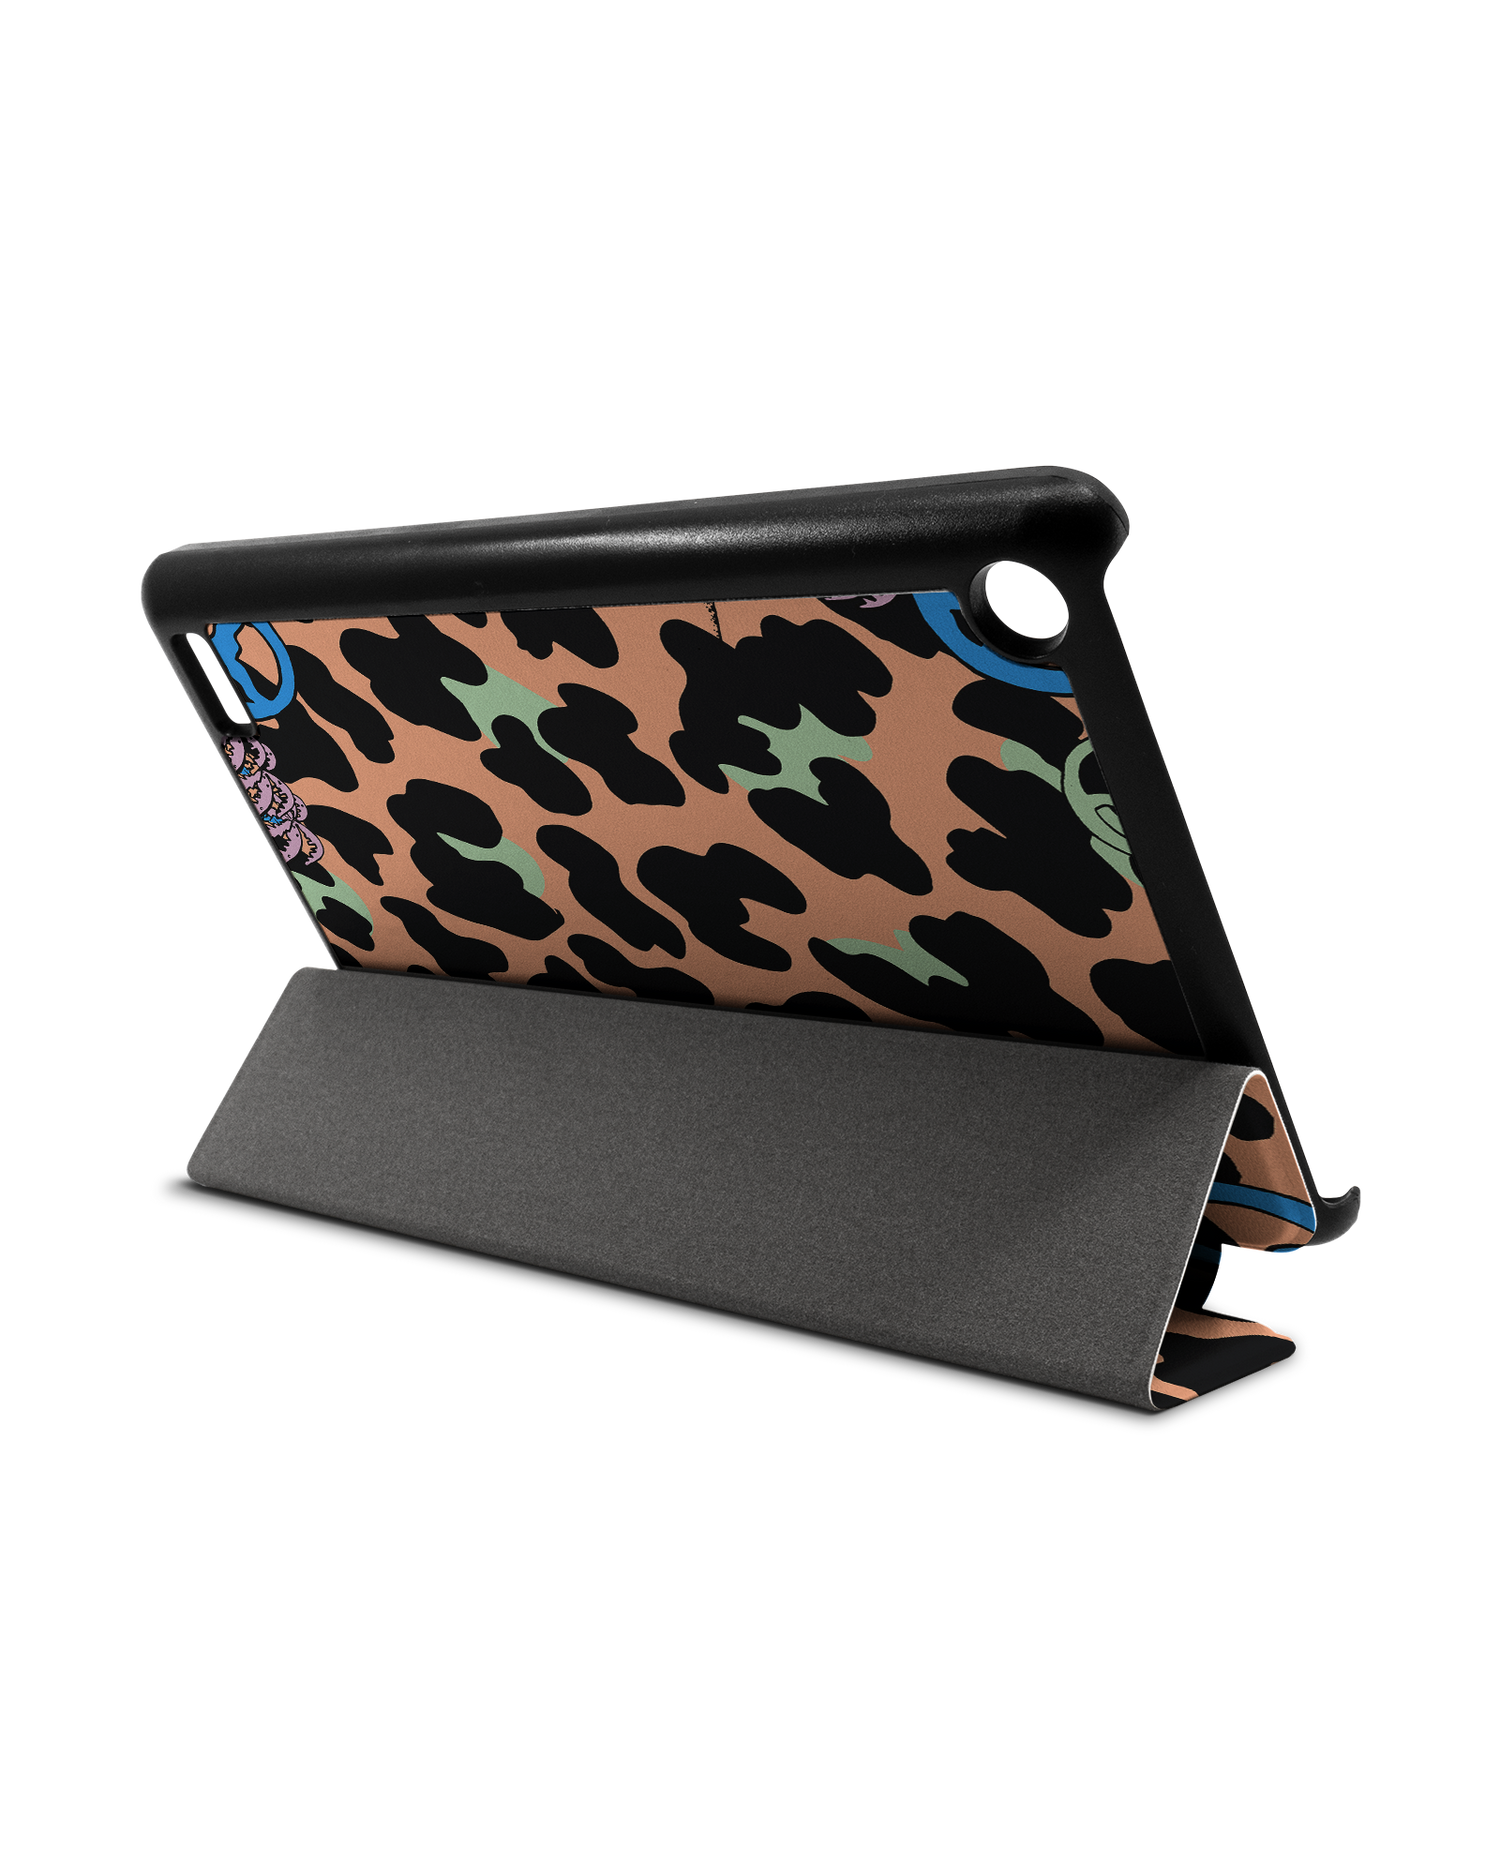 Leopard Peace Palms Tablet Smart Case für Amazon Fire 7: Aufgestellt im Querformat